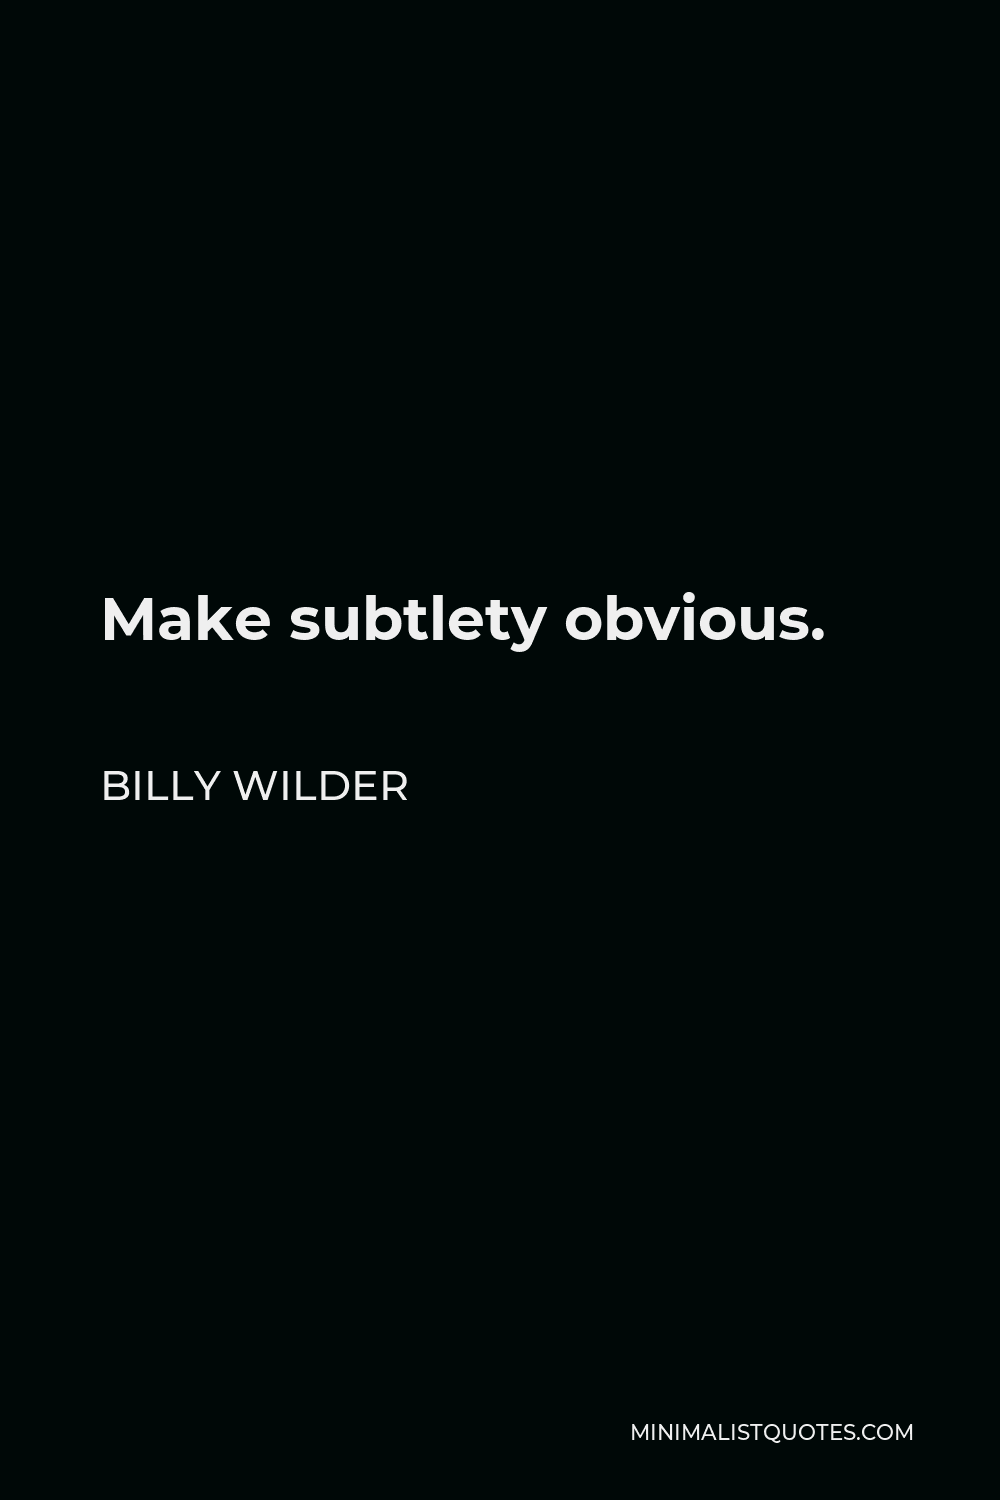 Billy Wilder Quote - Make subtlety obvious.